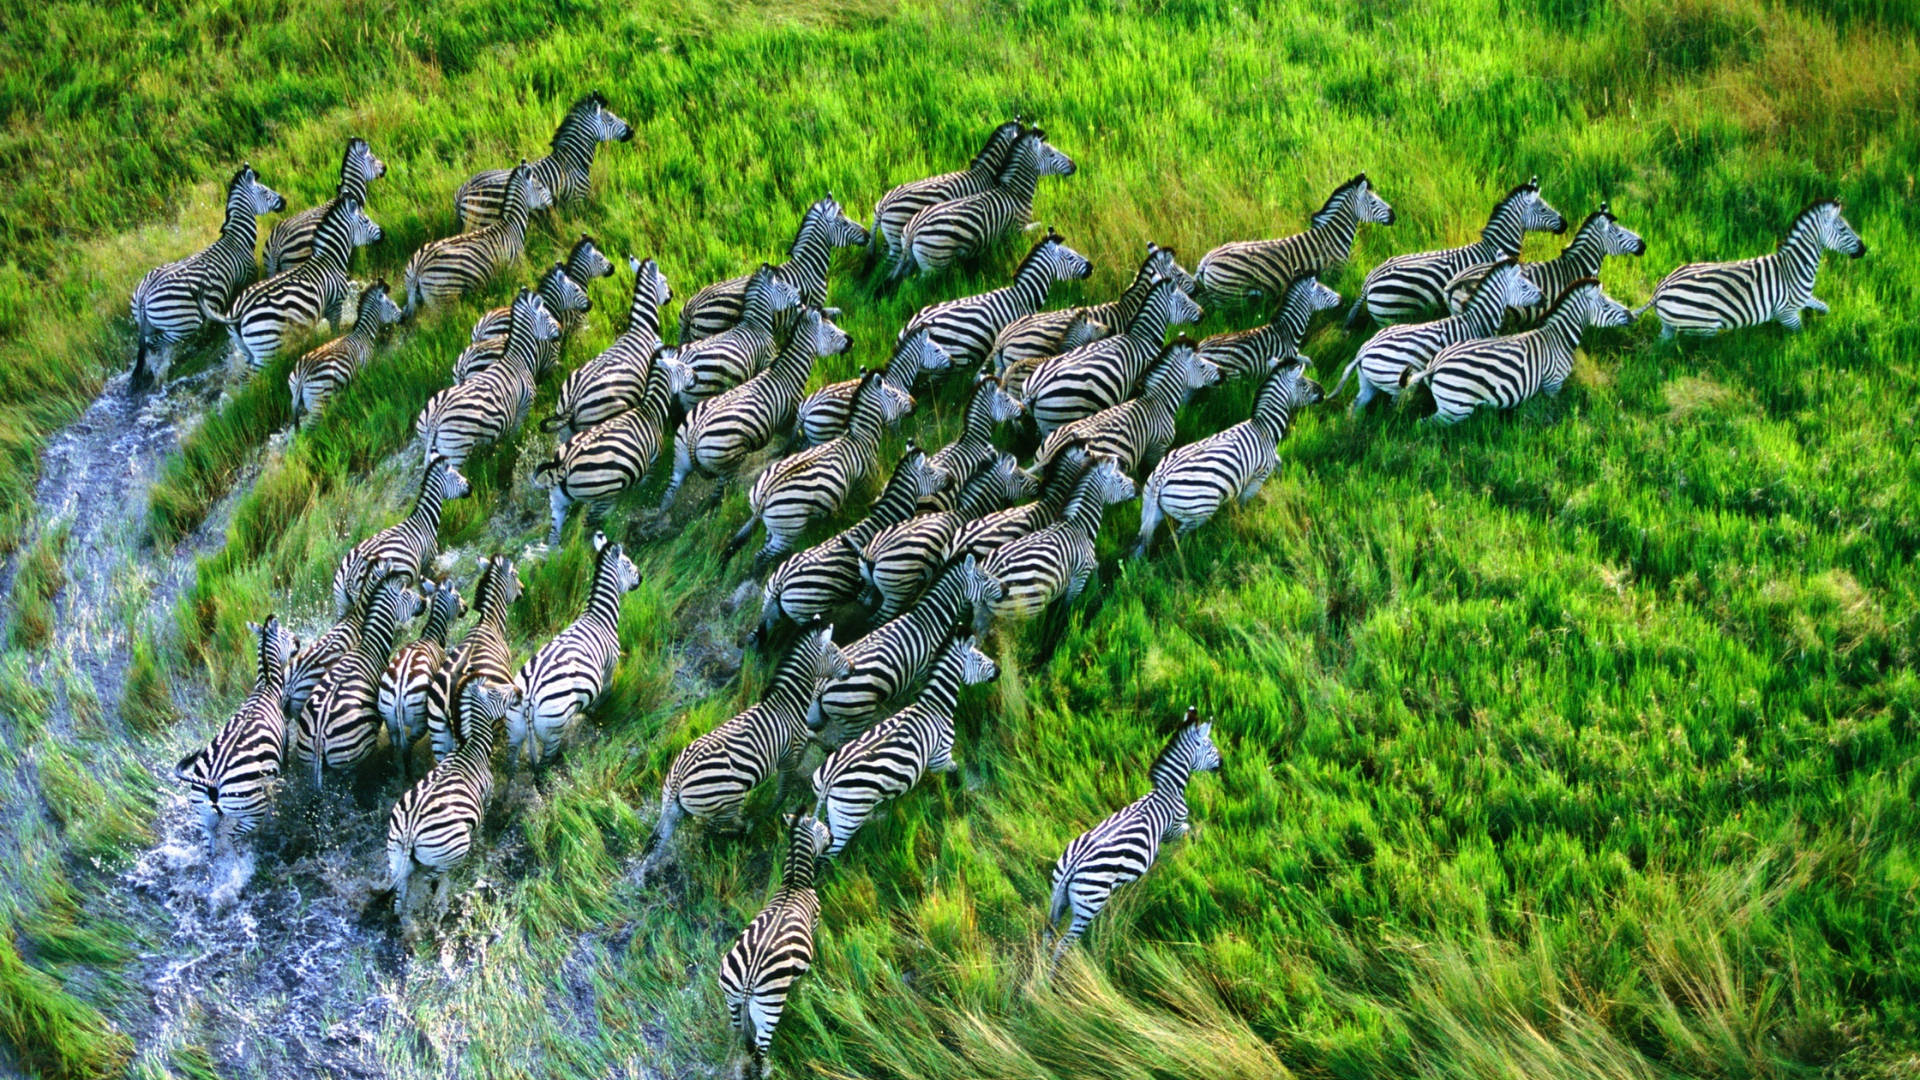 Running Zebra Aerial Angle Shot Wallpaper